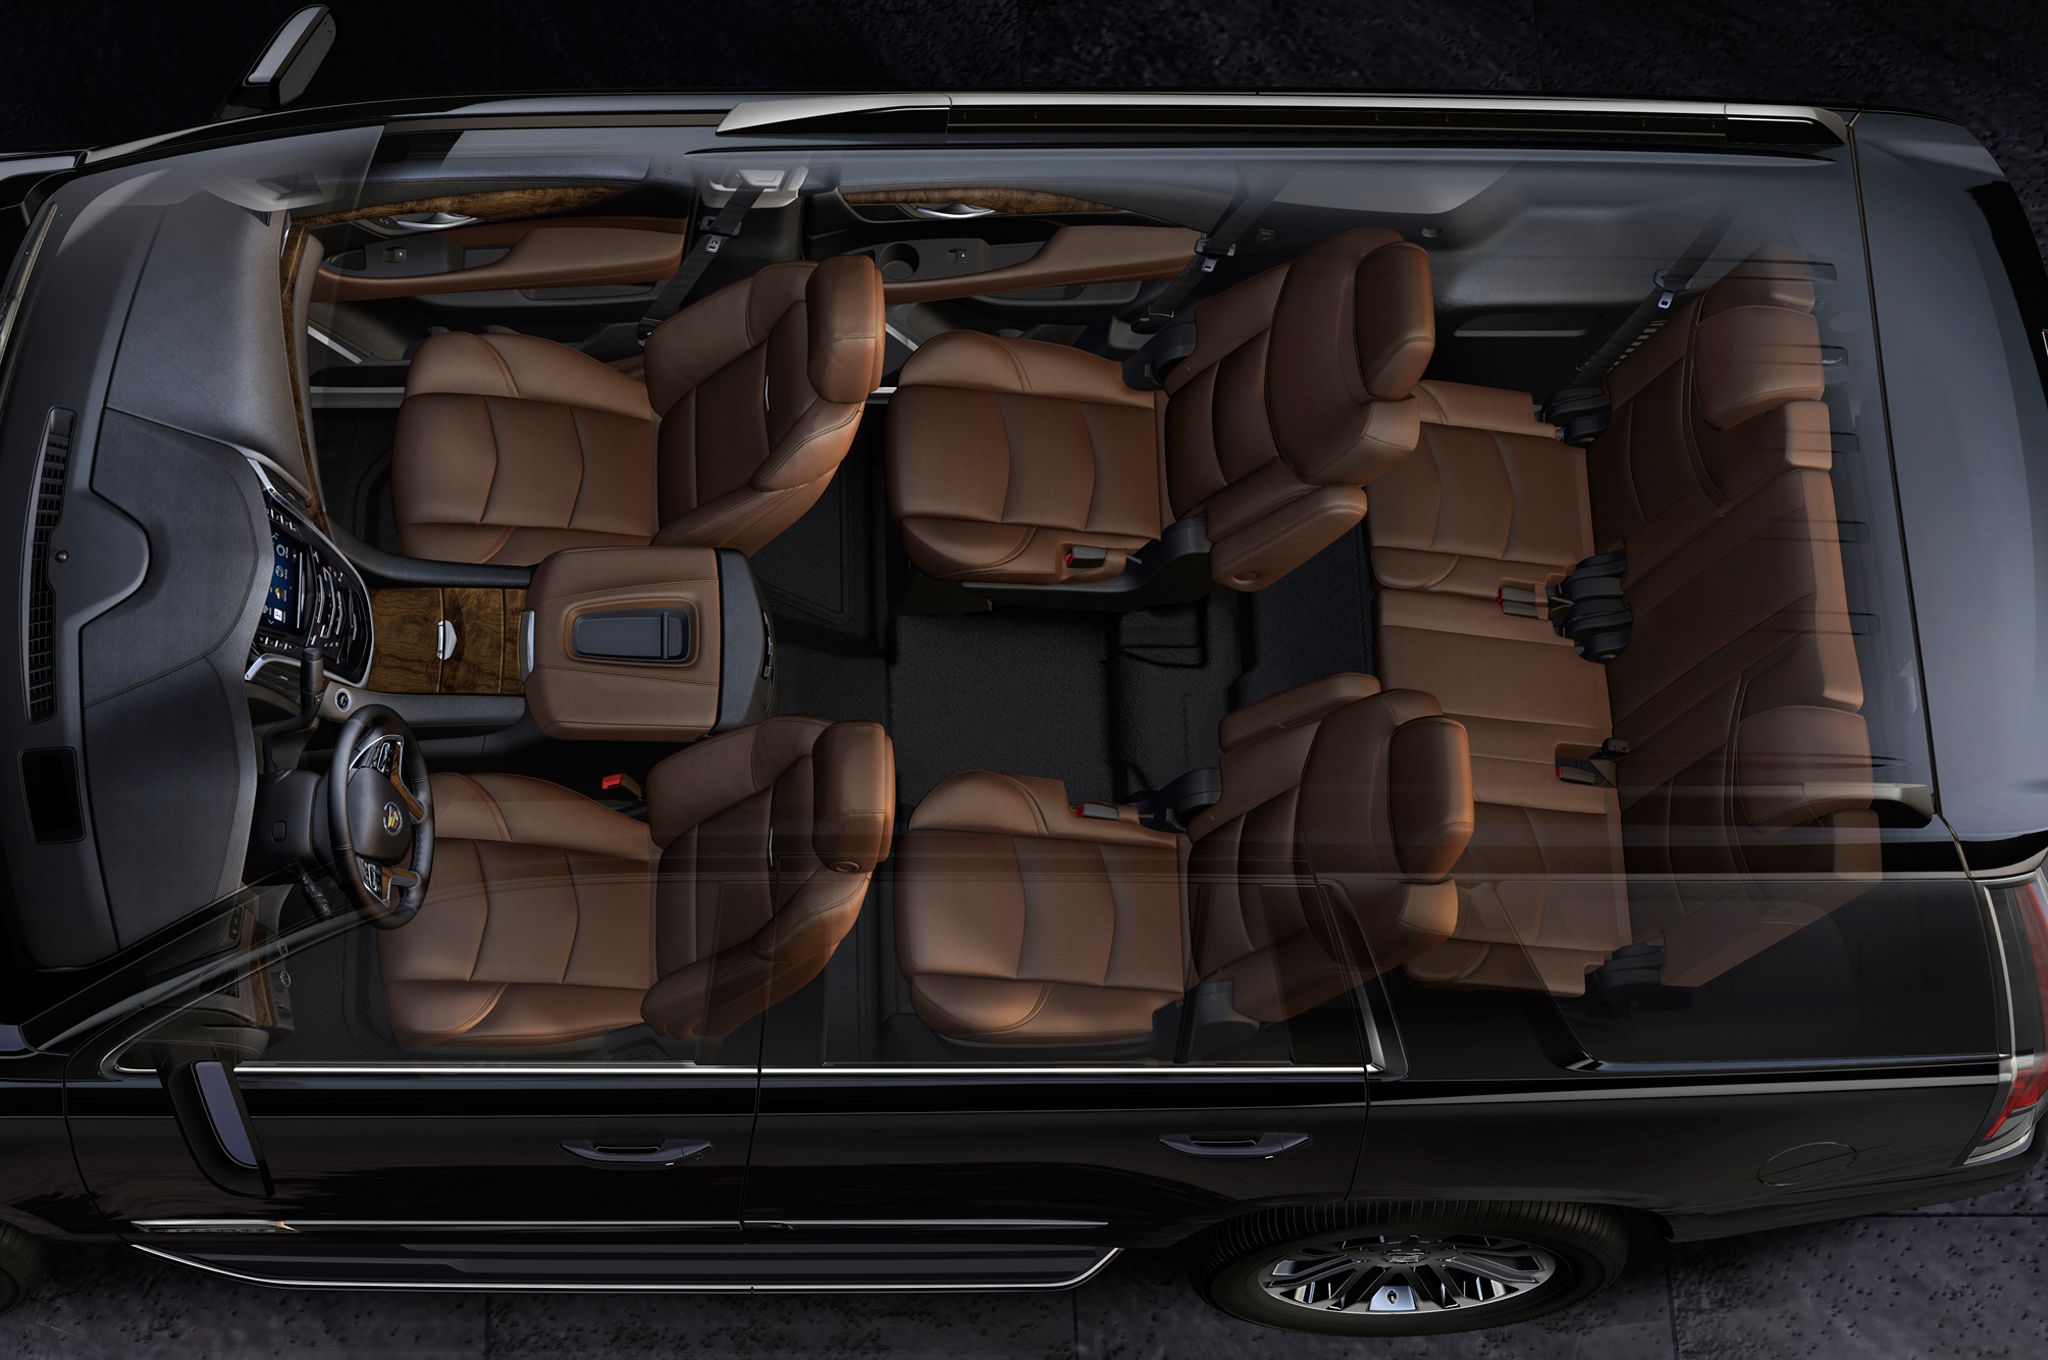 2015 Cadillac Escalade Interior View  (View 8 of 14)